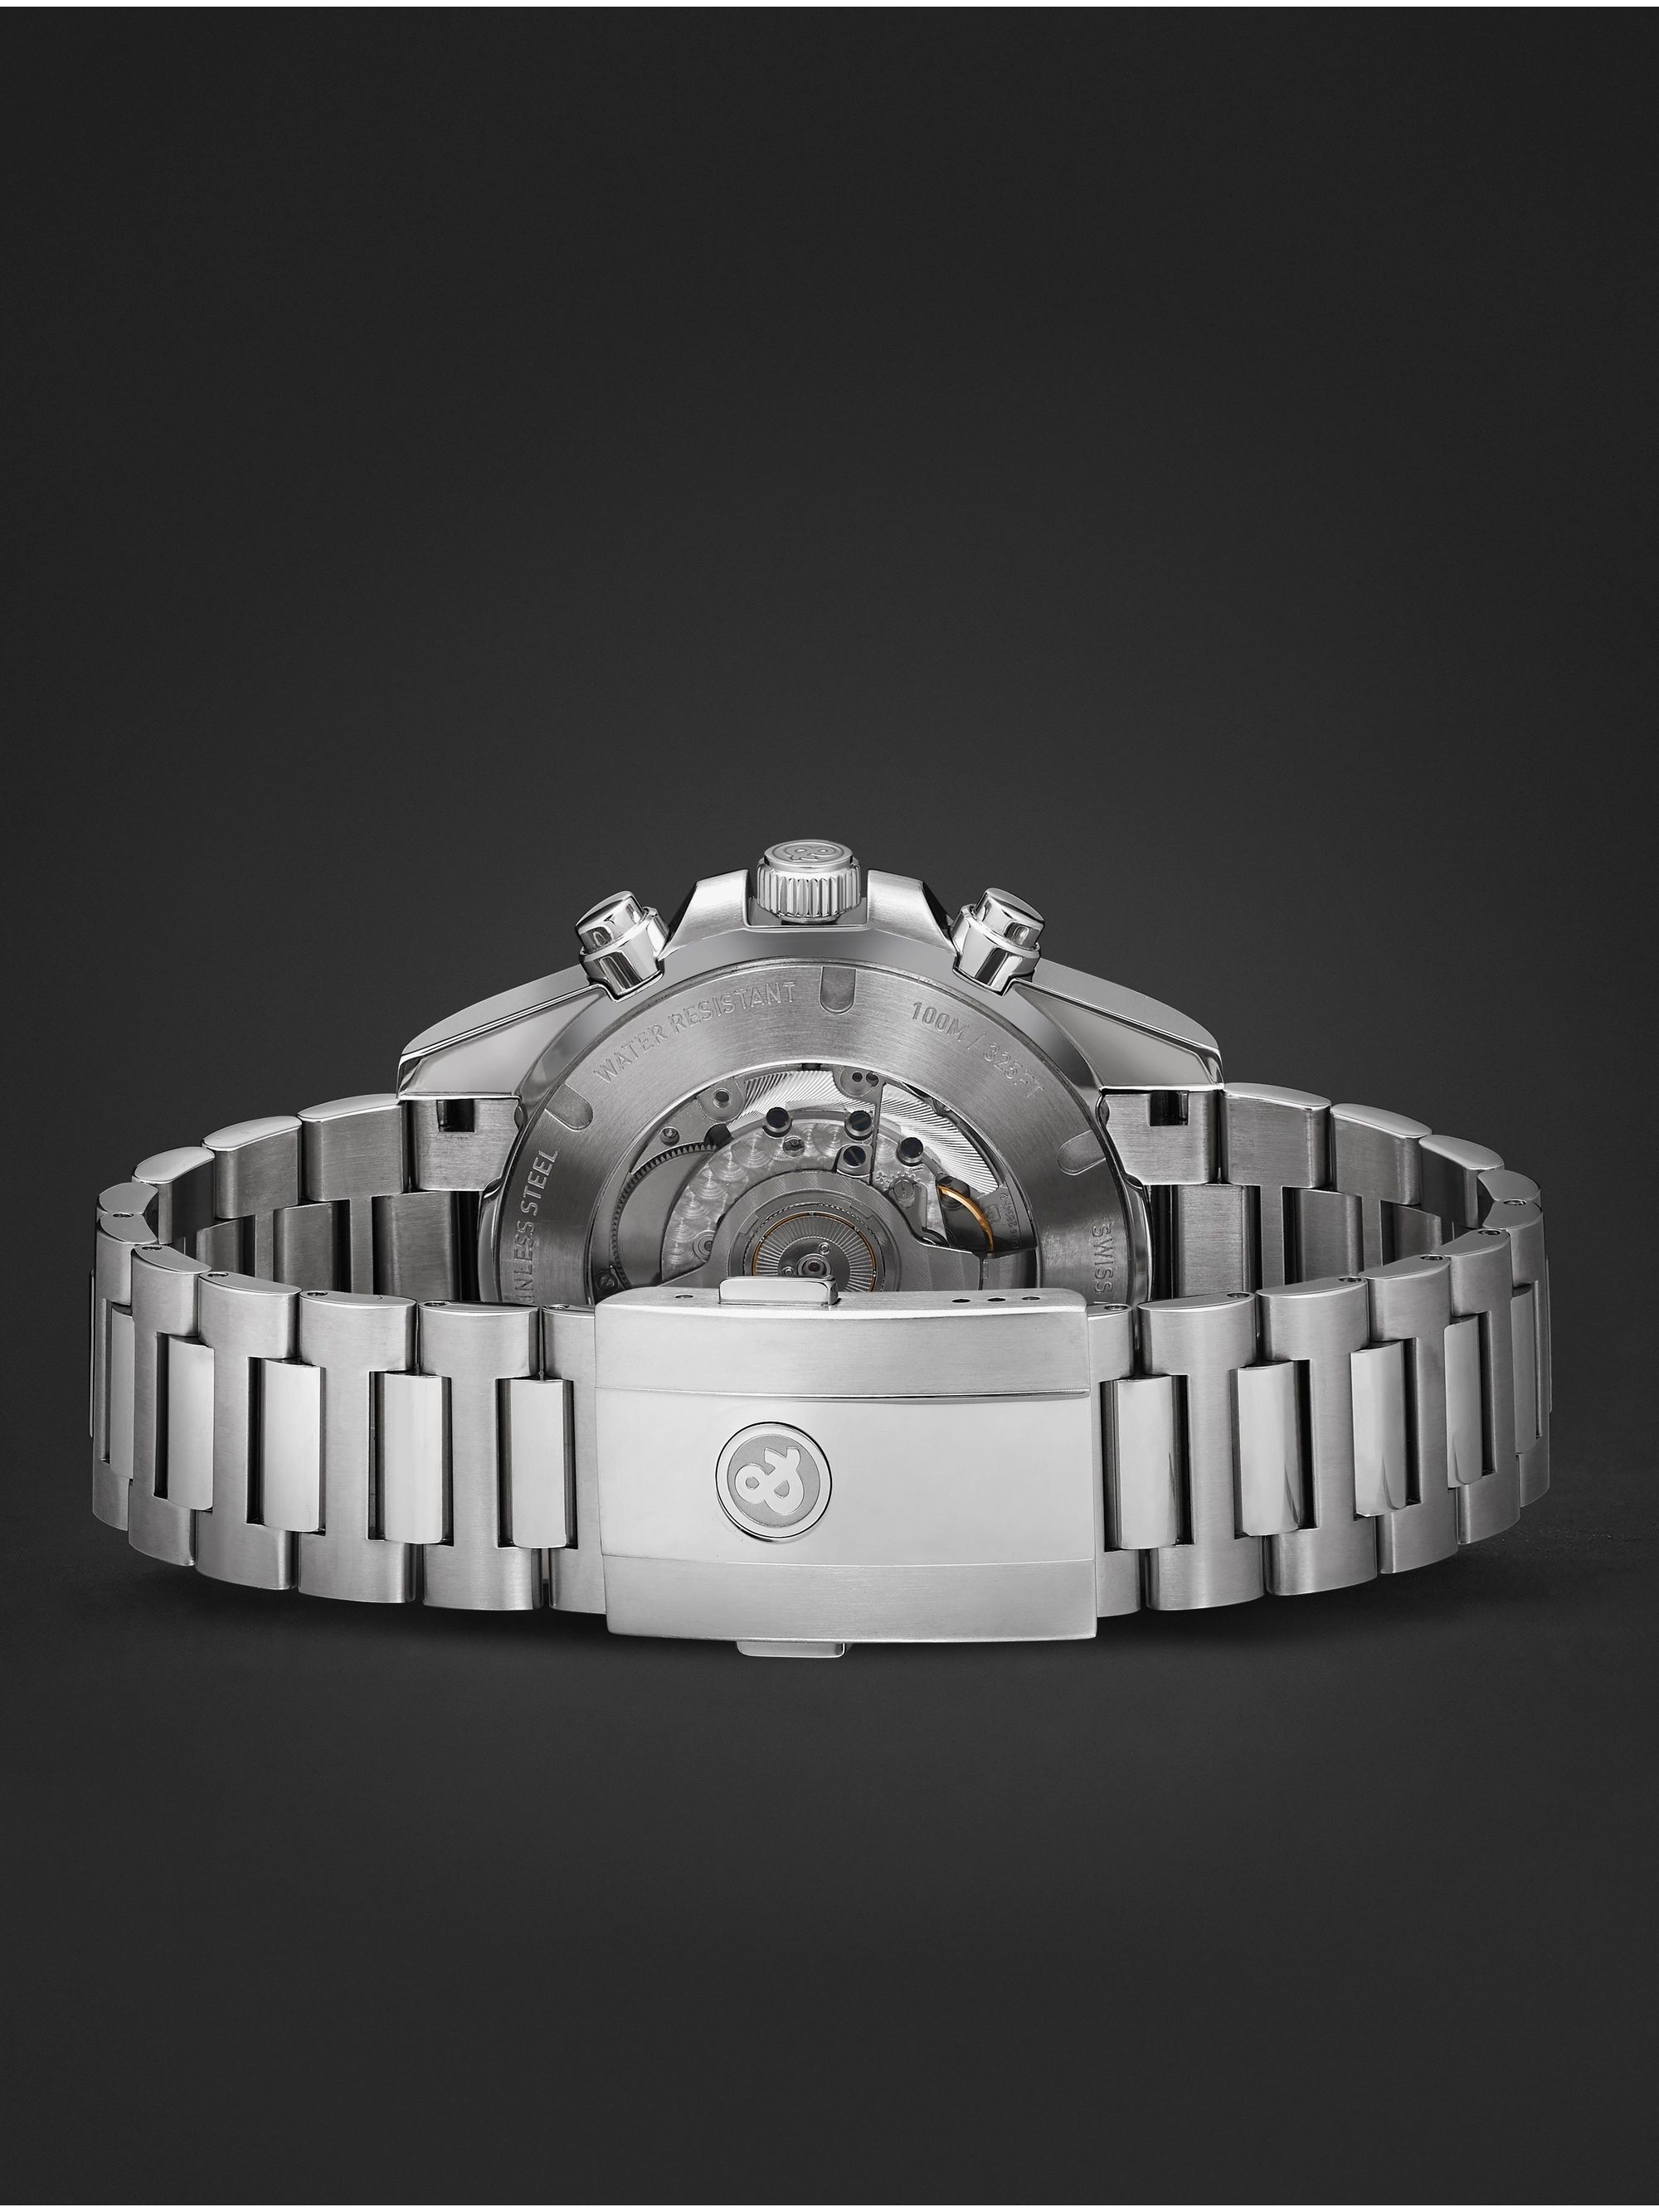 BELL & ROSS BR V3-94 Black Steel Automatic Chronograph 43mm Steel Watch, Ref. No. BRV394-BL-ST/SST